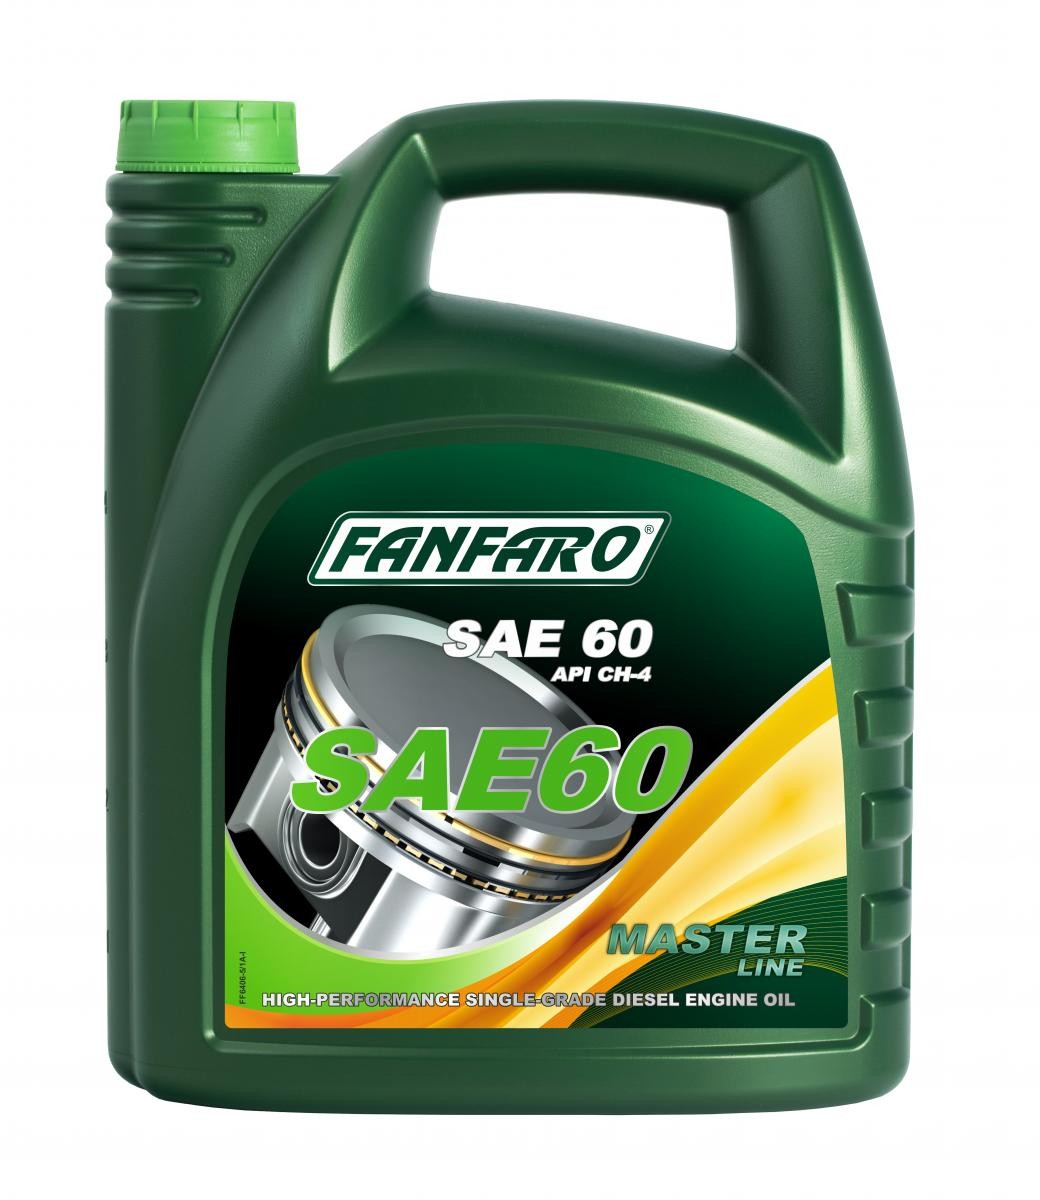 FF6406-5 FANFARO Oil SUZUKI SAE 60, 5l, Mineral Oil